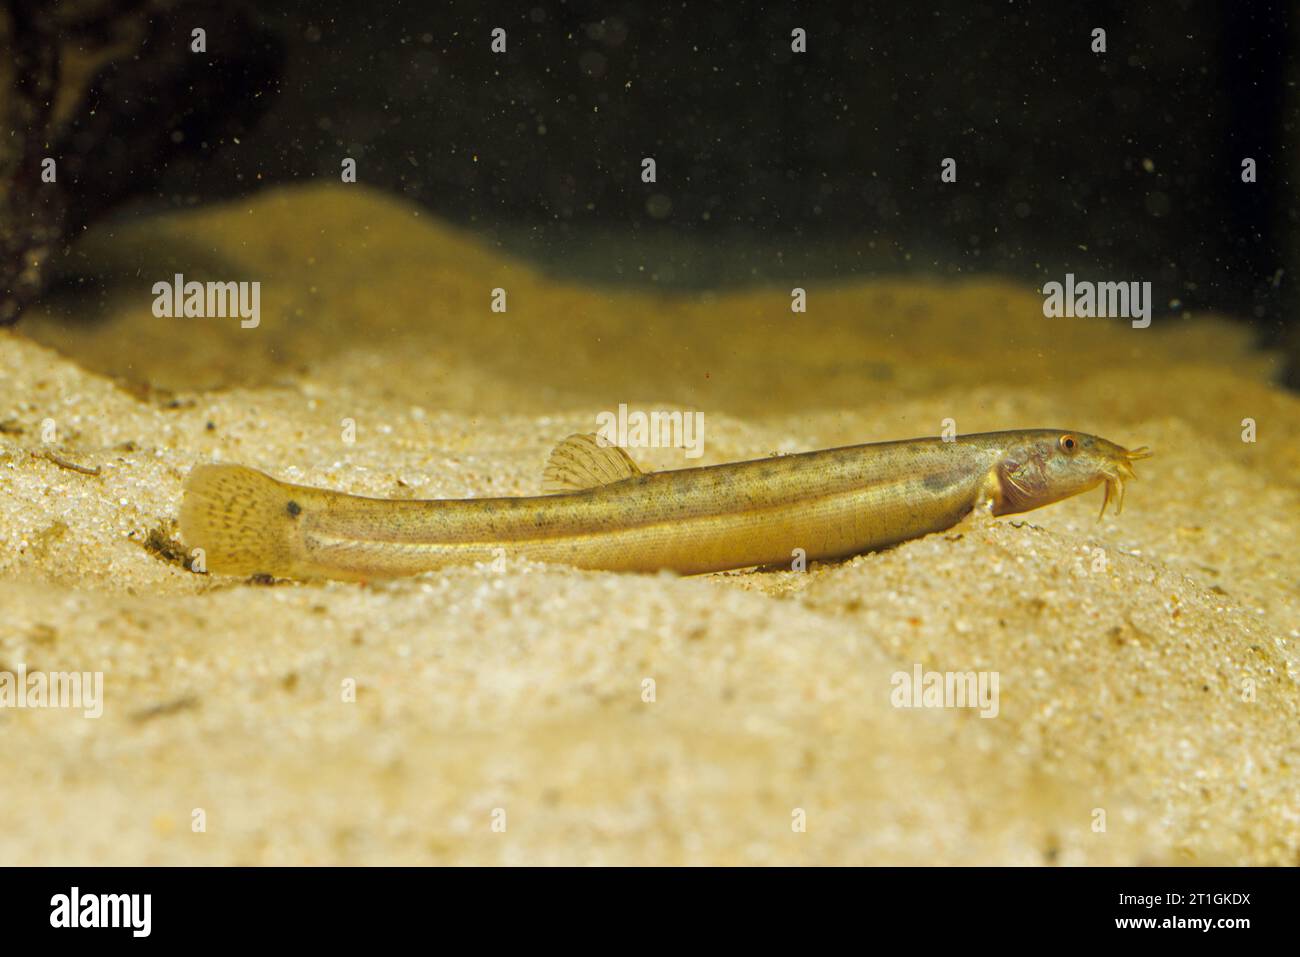 Japanese weatherfish (Misgurnus anguillicaudatus), on sandy ground, side view Stock Photo